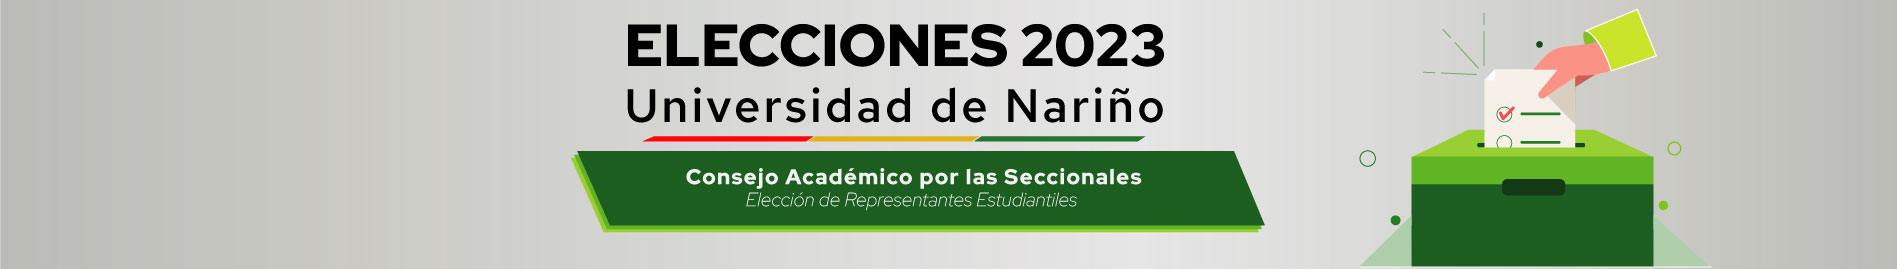 banner_elecciones_seccionale